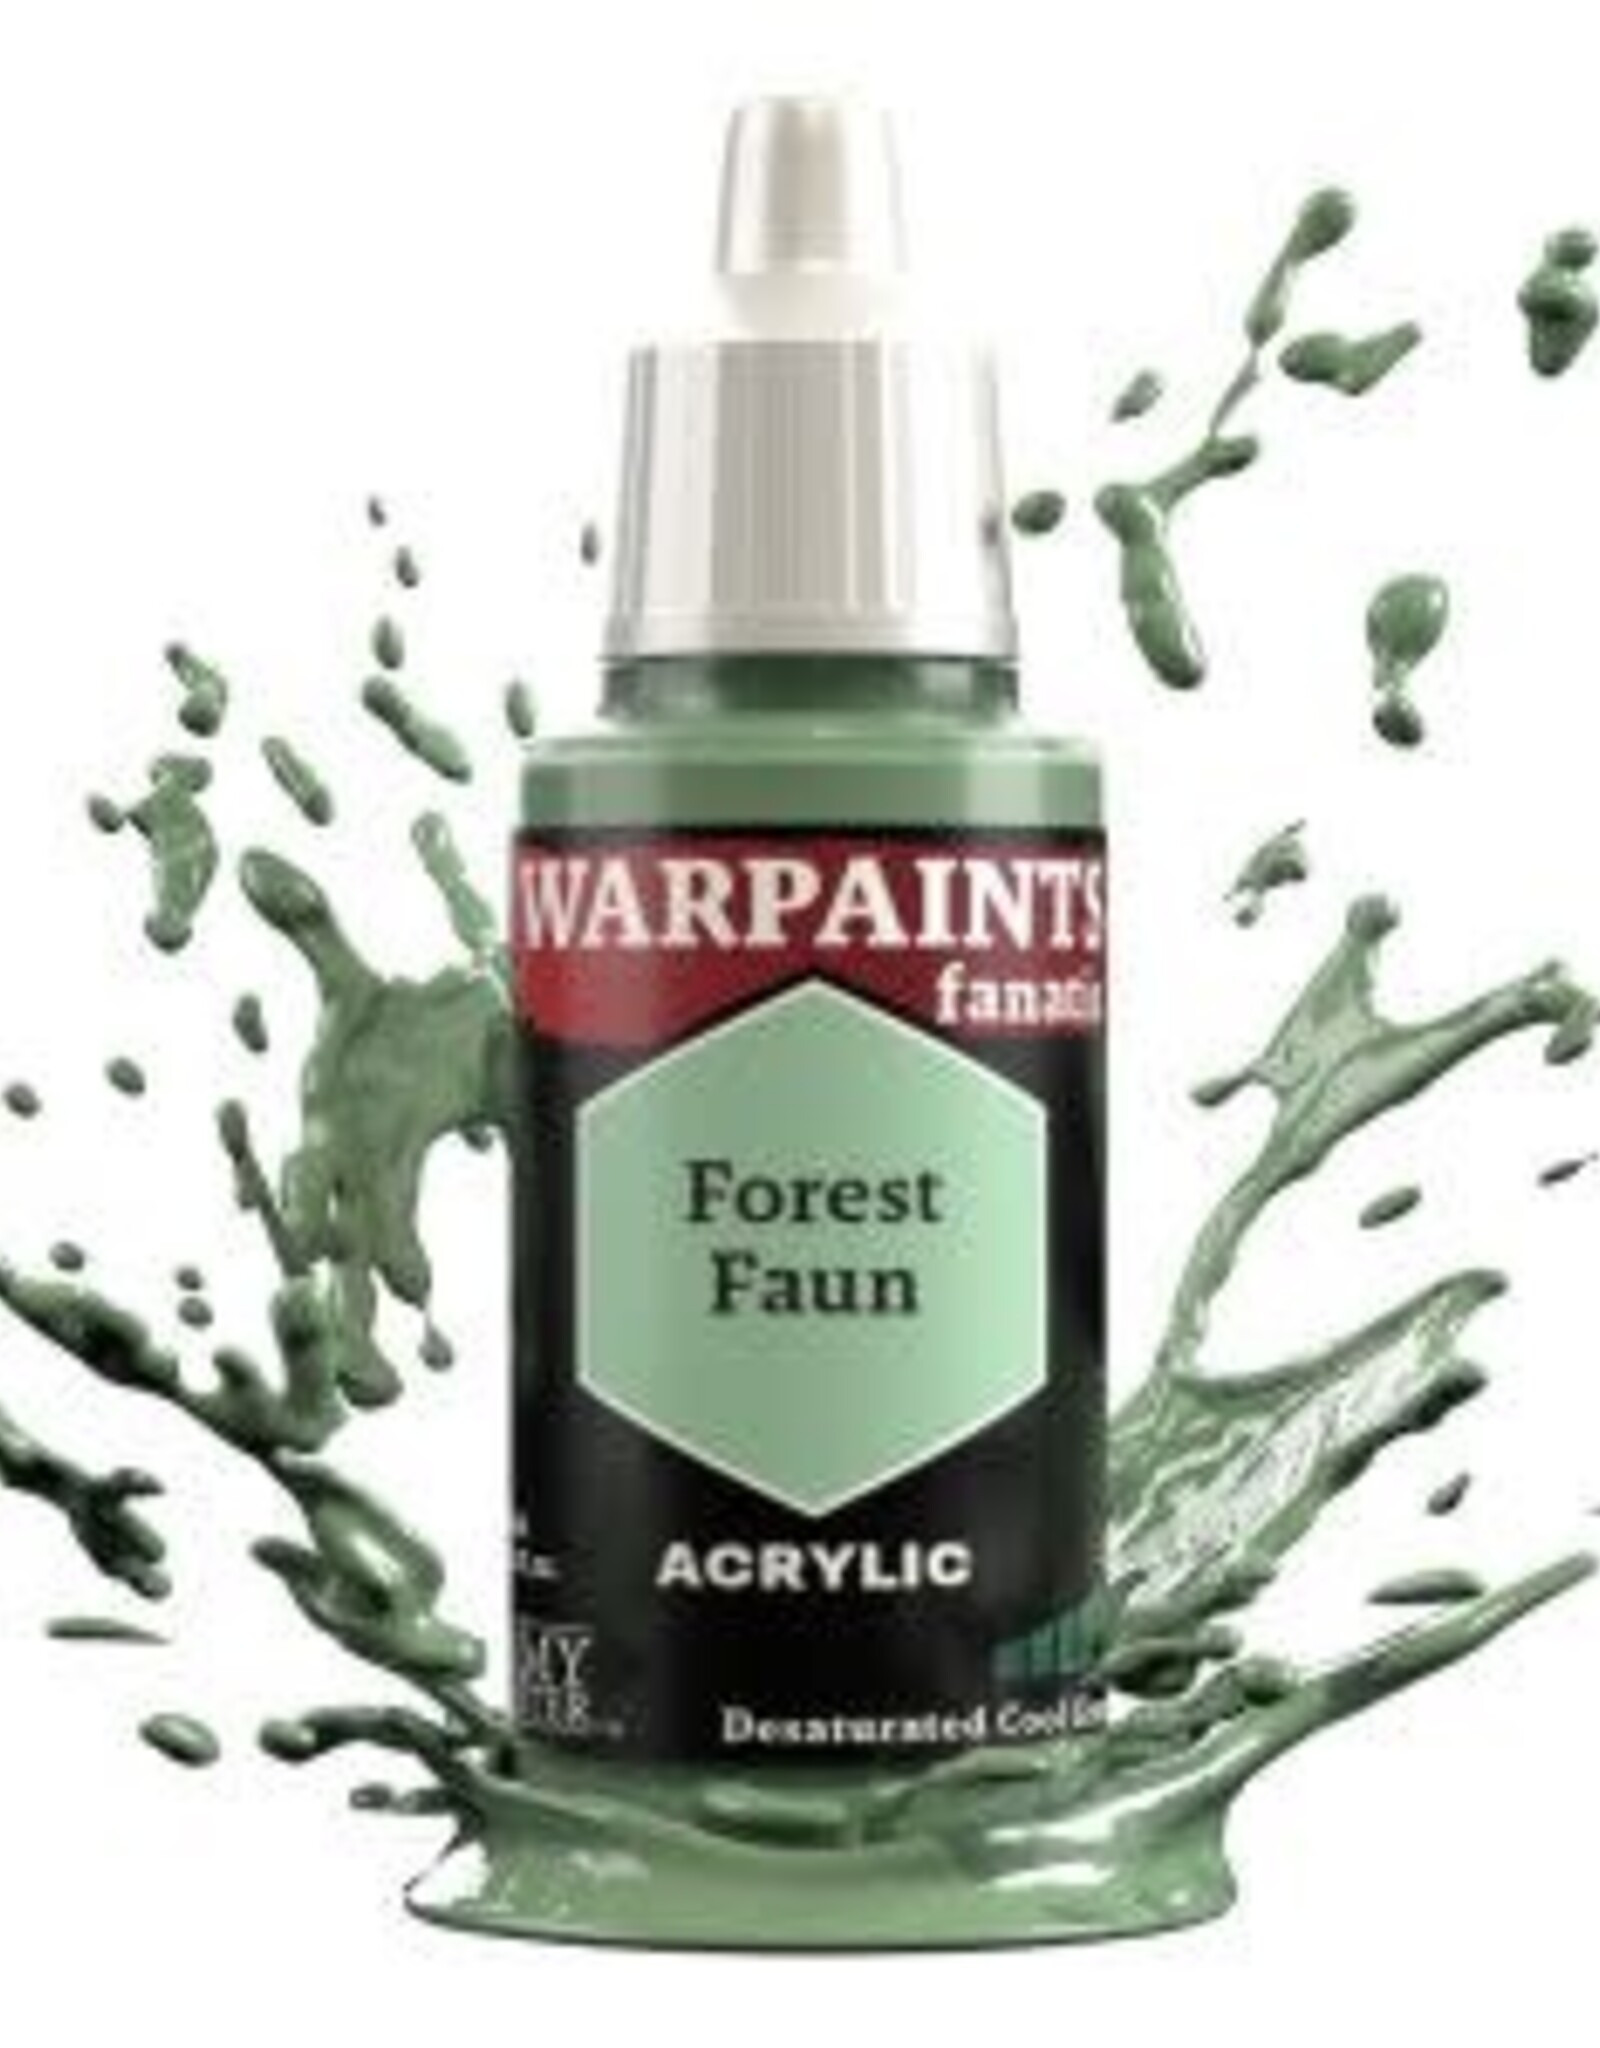 Warpaints Fanatic: Forest Faun